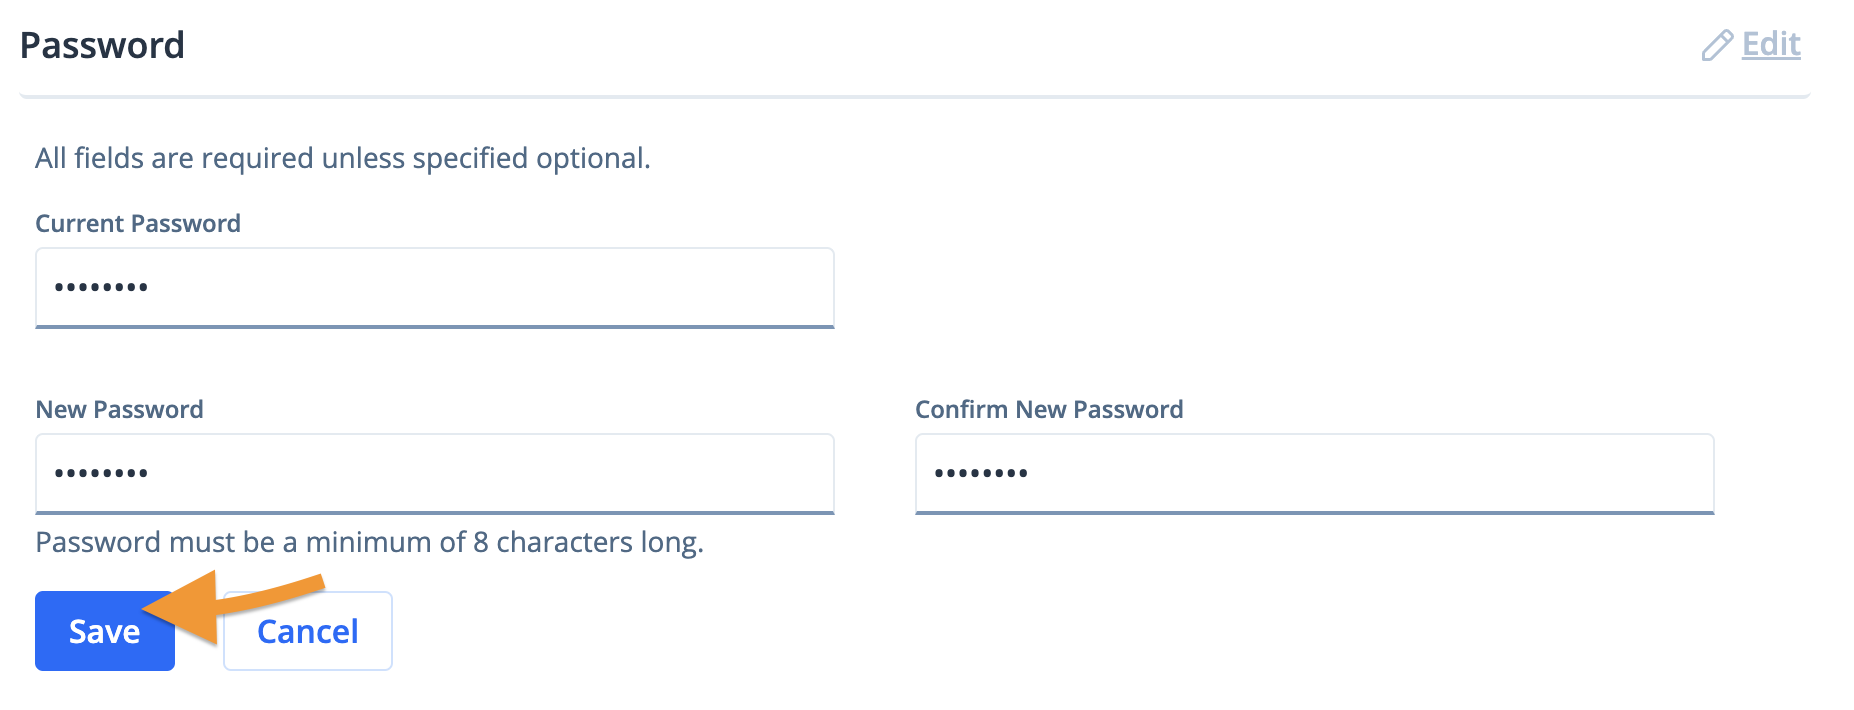 Change password feature